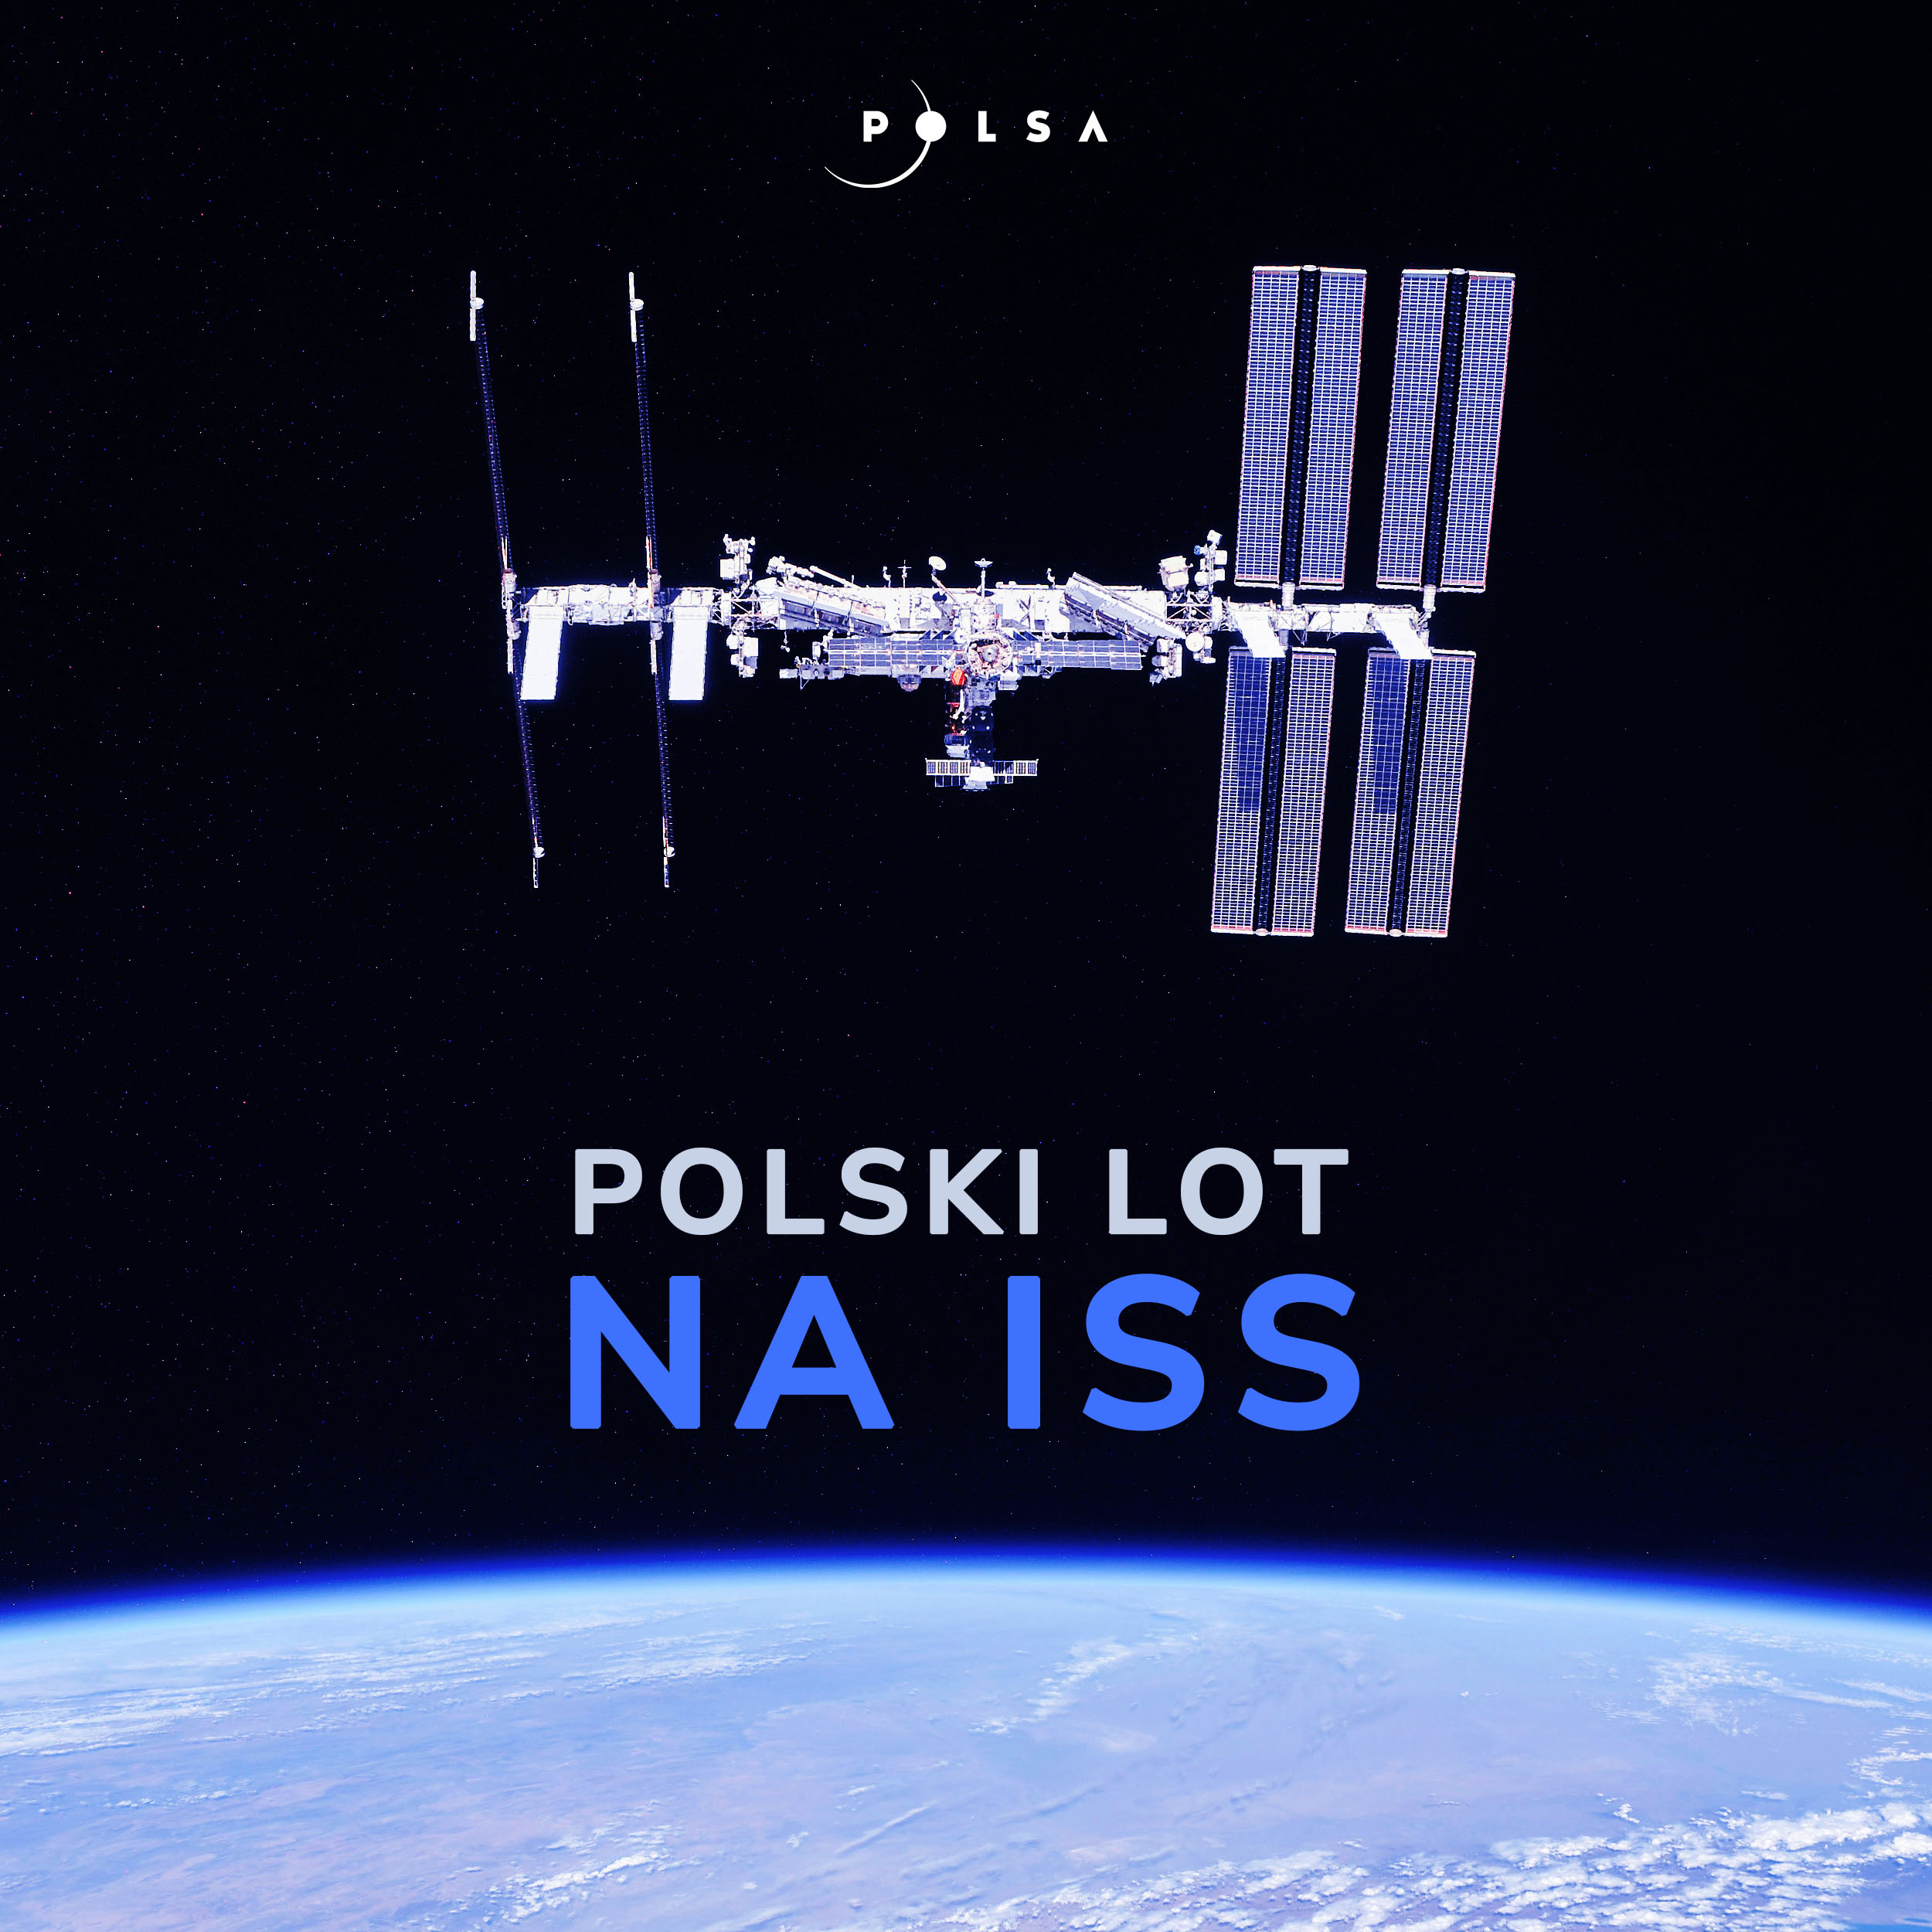 Polski lot na ISS (źródło: POLSA)